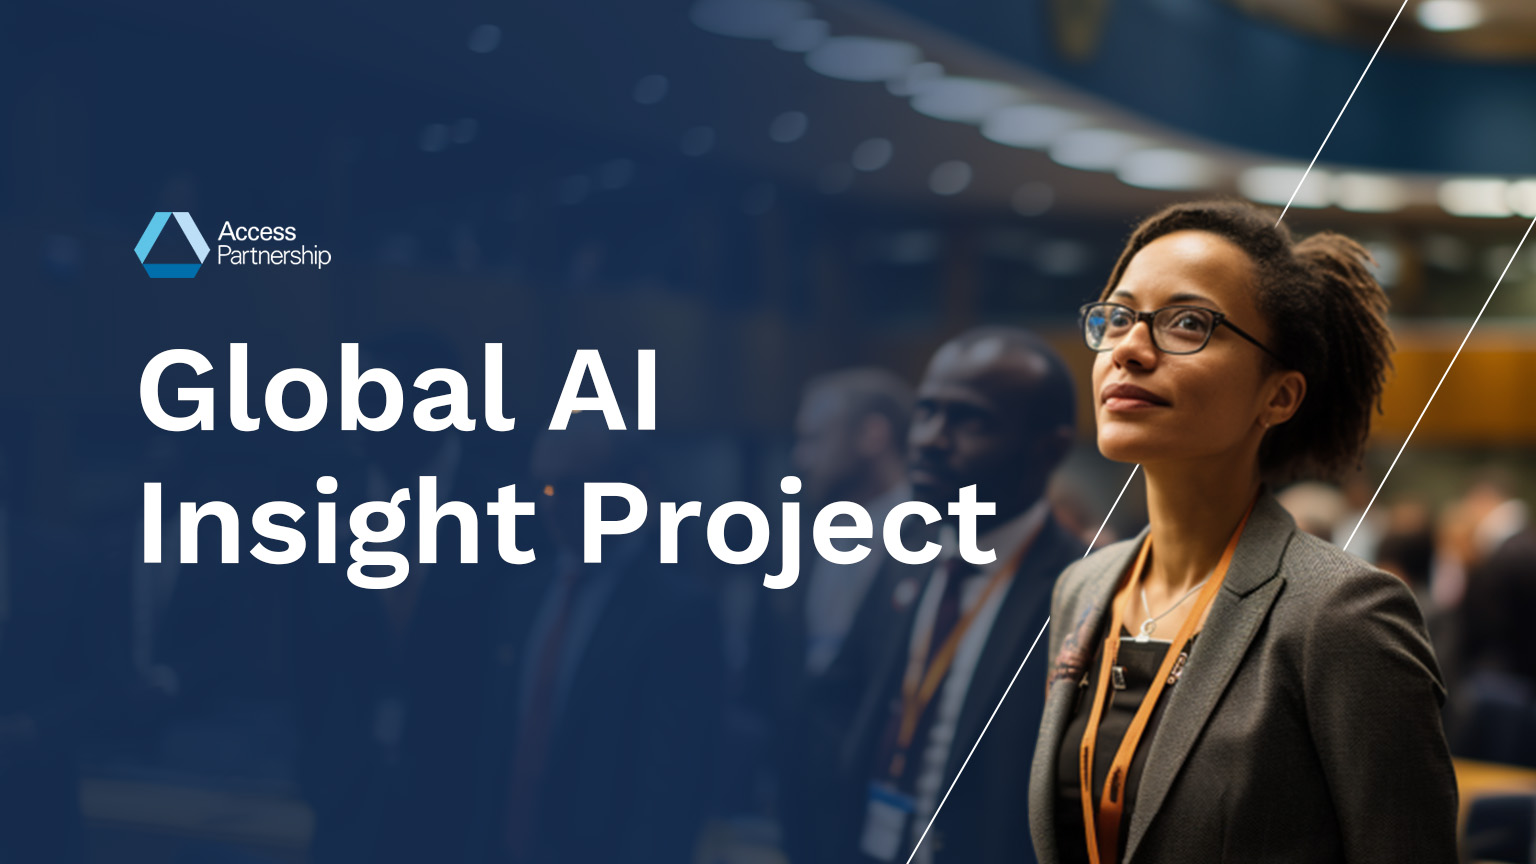 Introducing Access Partnership’s Global AI Insight Project